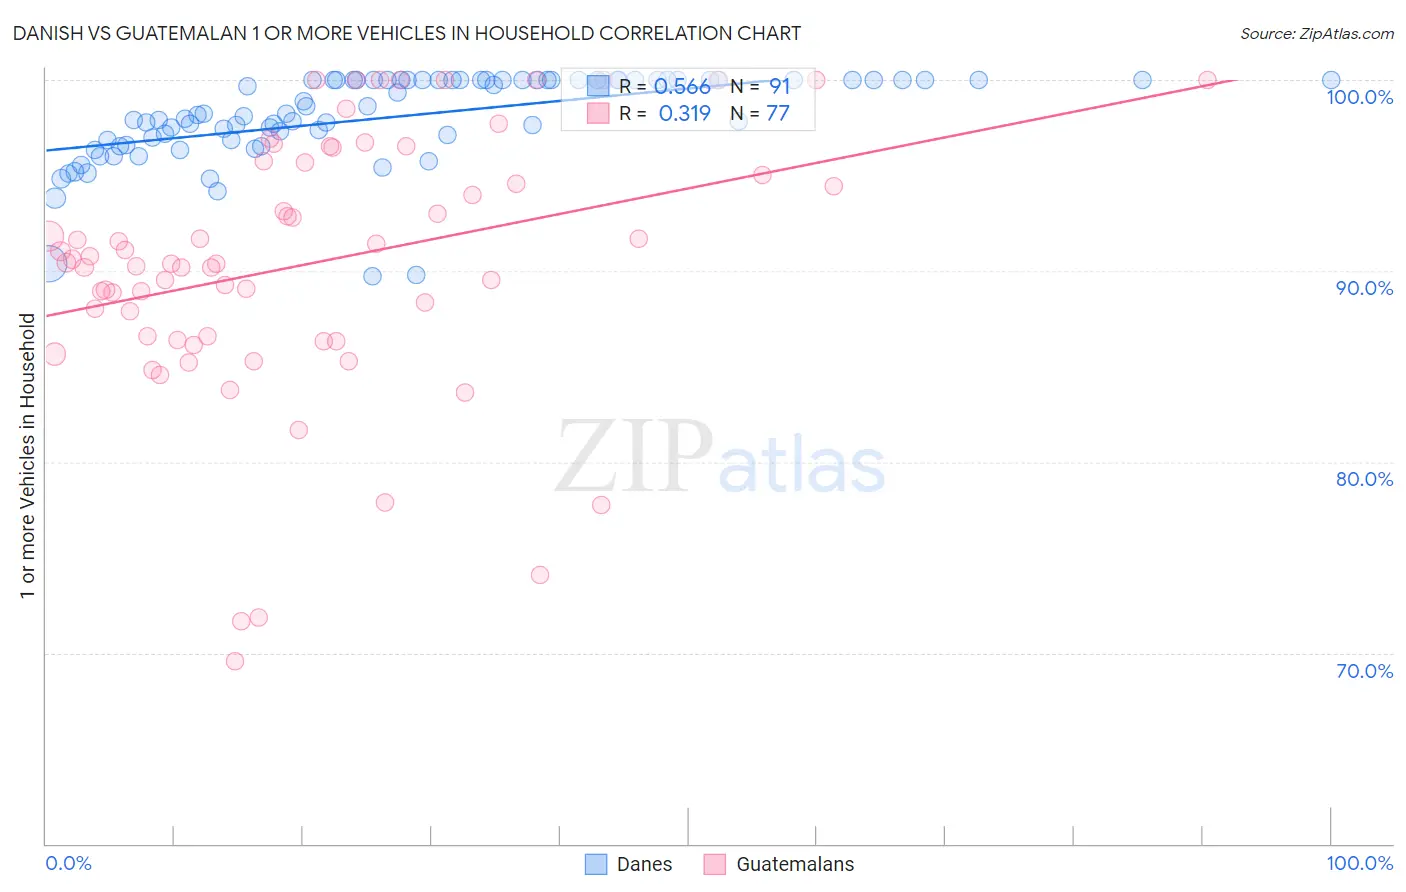 Danish vs Guatemalan 1 or more Vehicles in Household